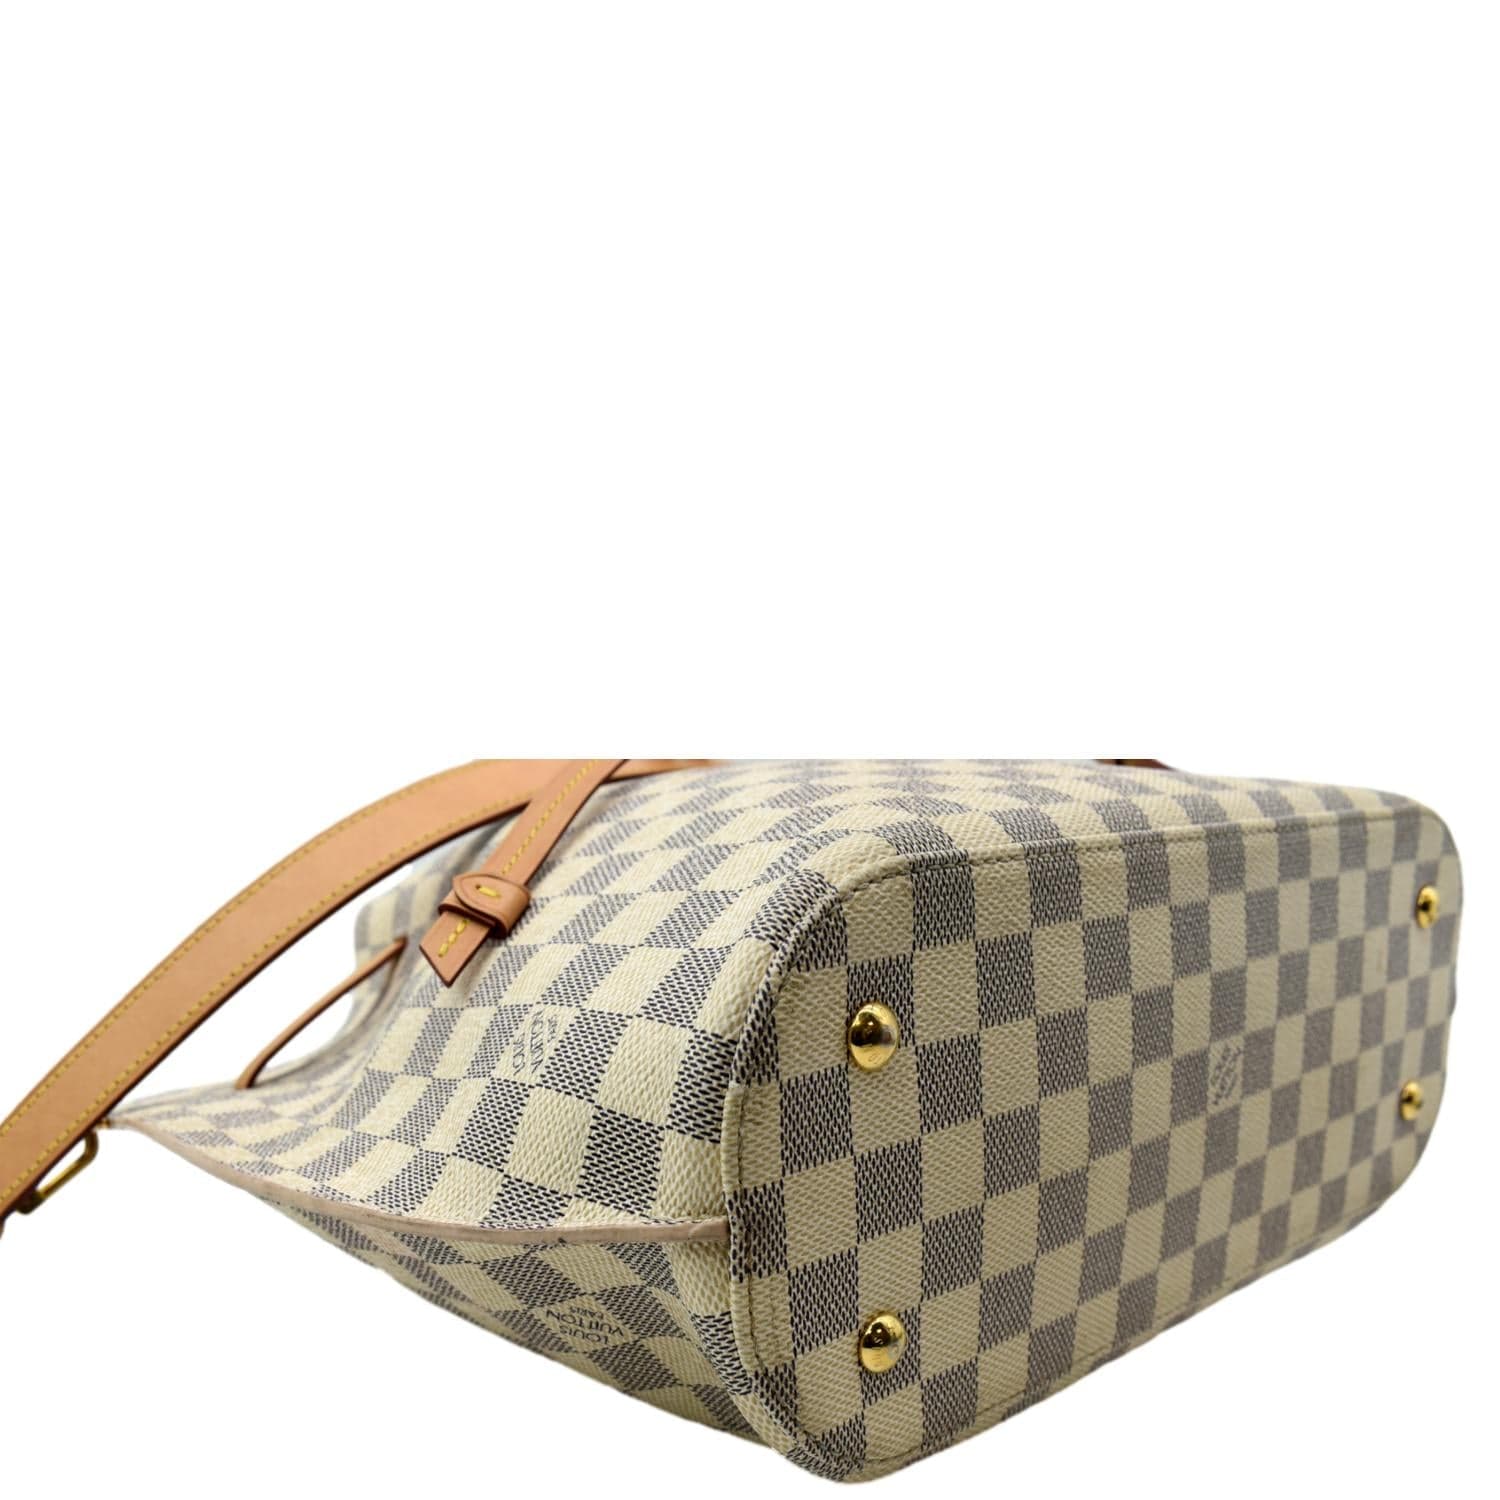 Louis Vuitton Girolata Shoulder Bag in Damier Azur Canvas, Mint Condition